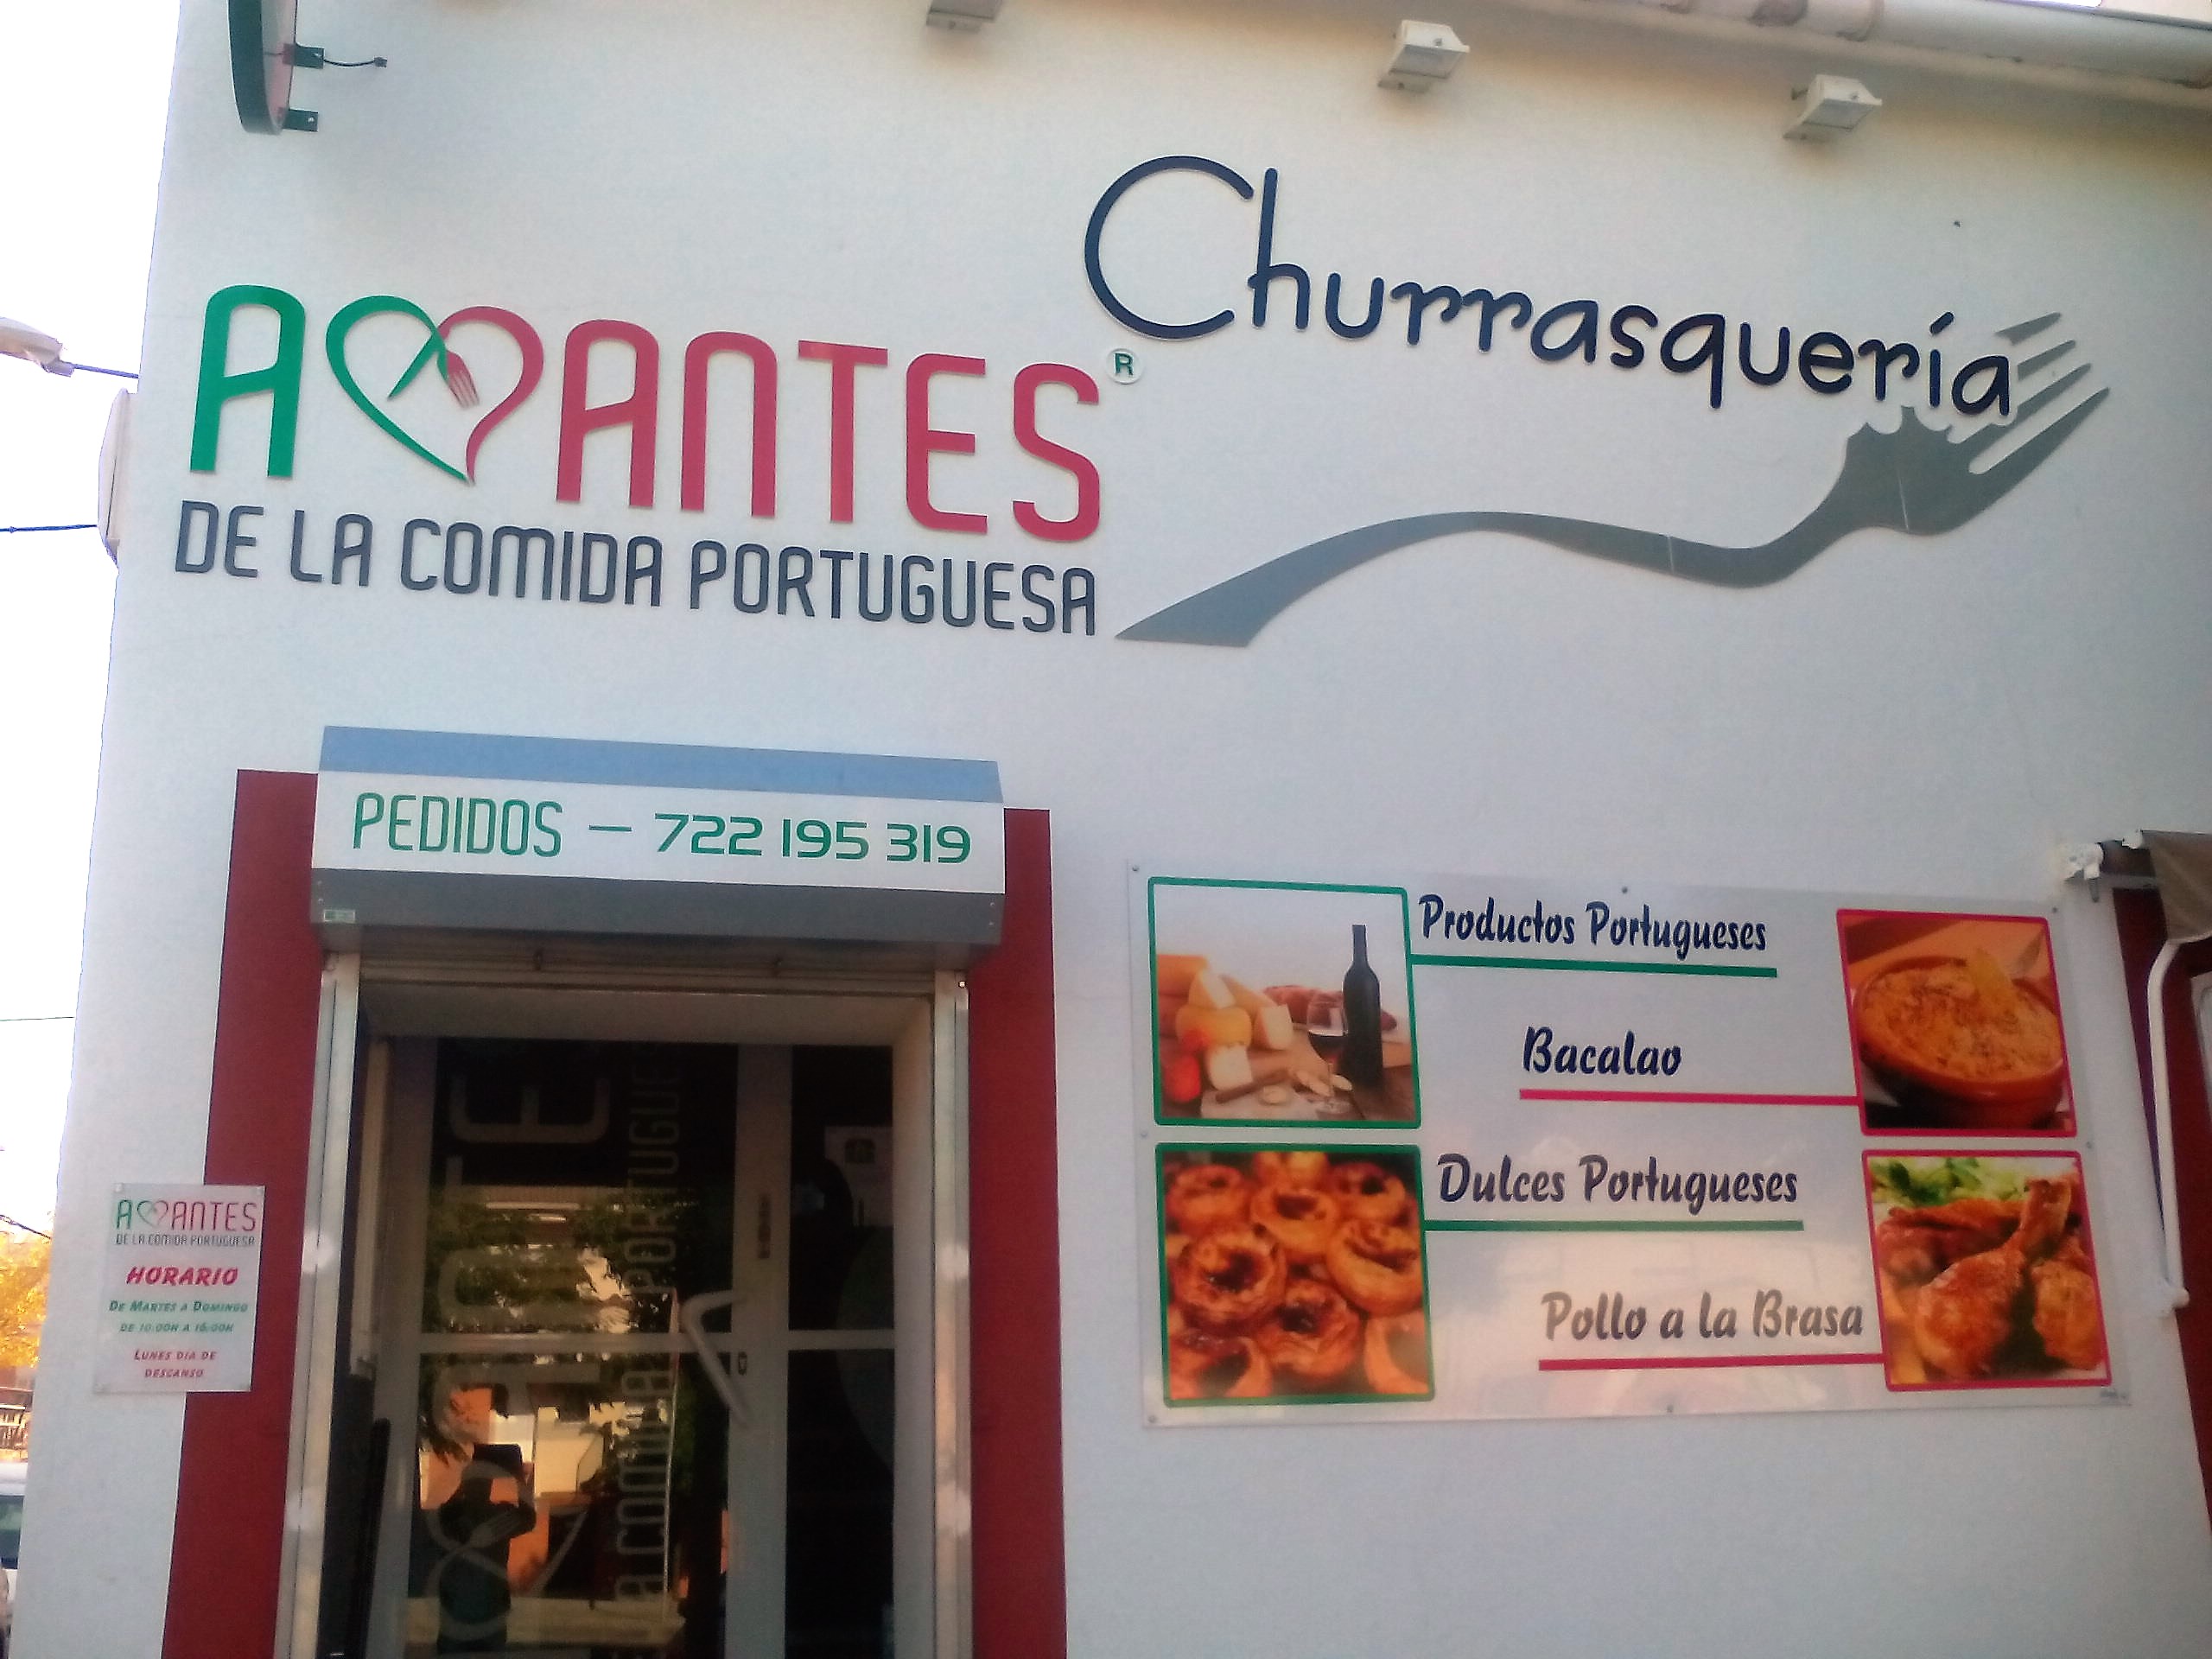 españa pollos portugueses merida - amantes de la comida portuguesa